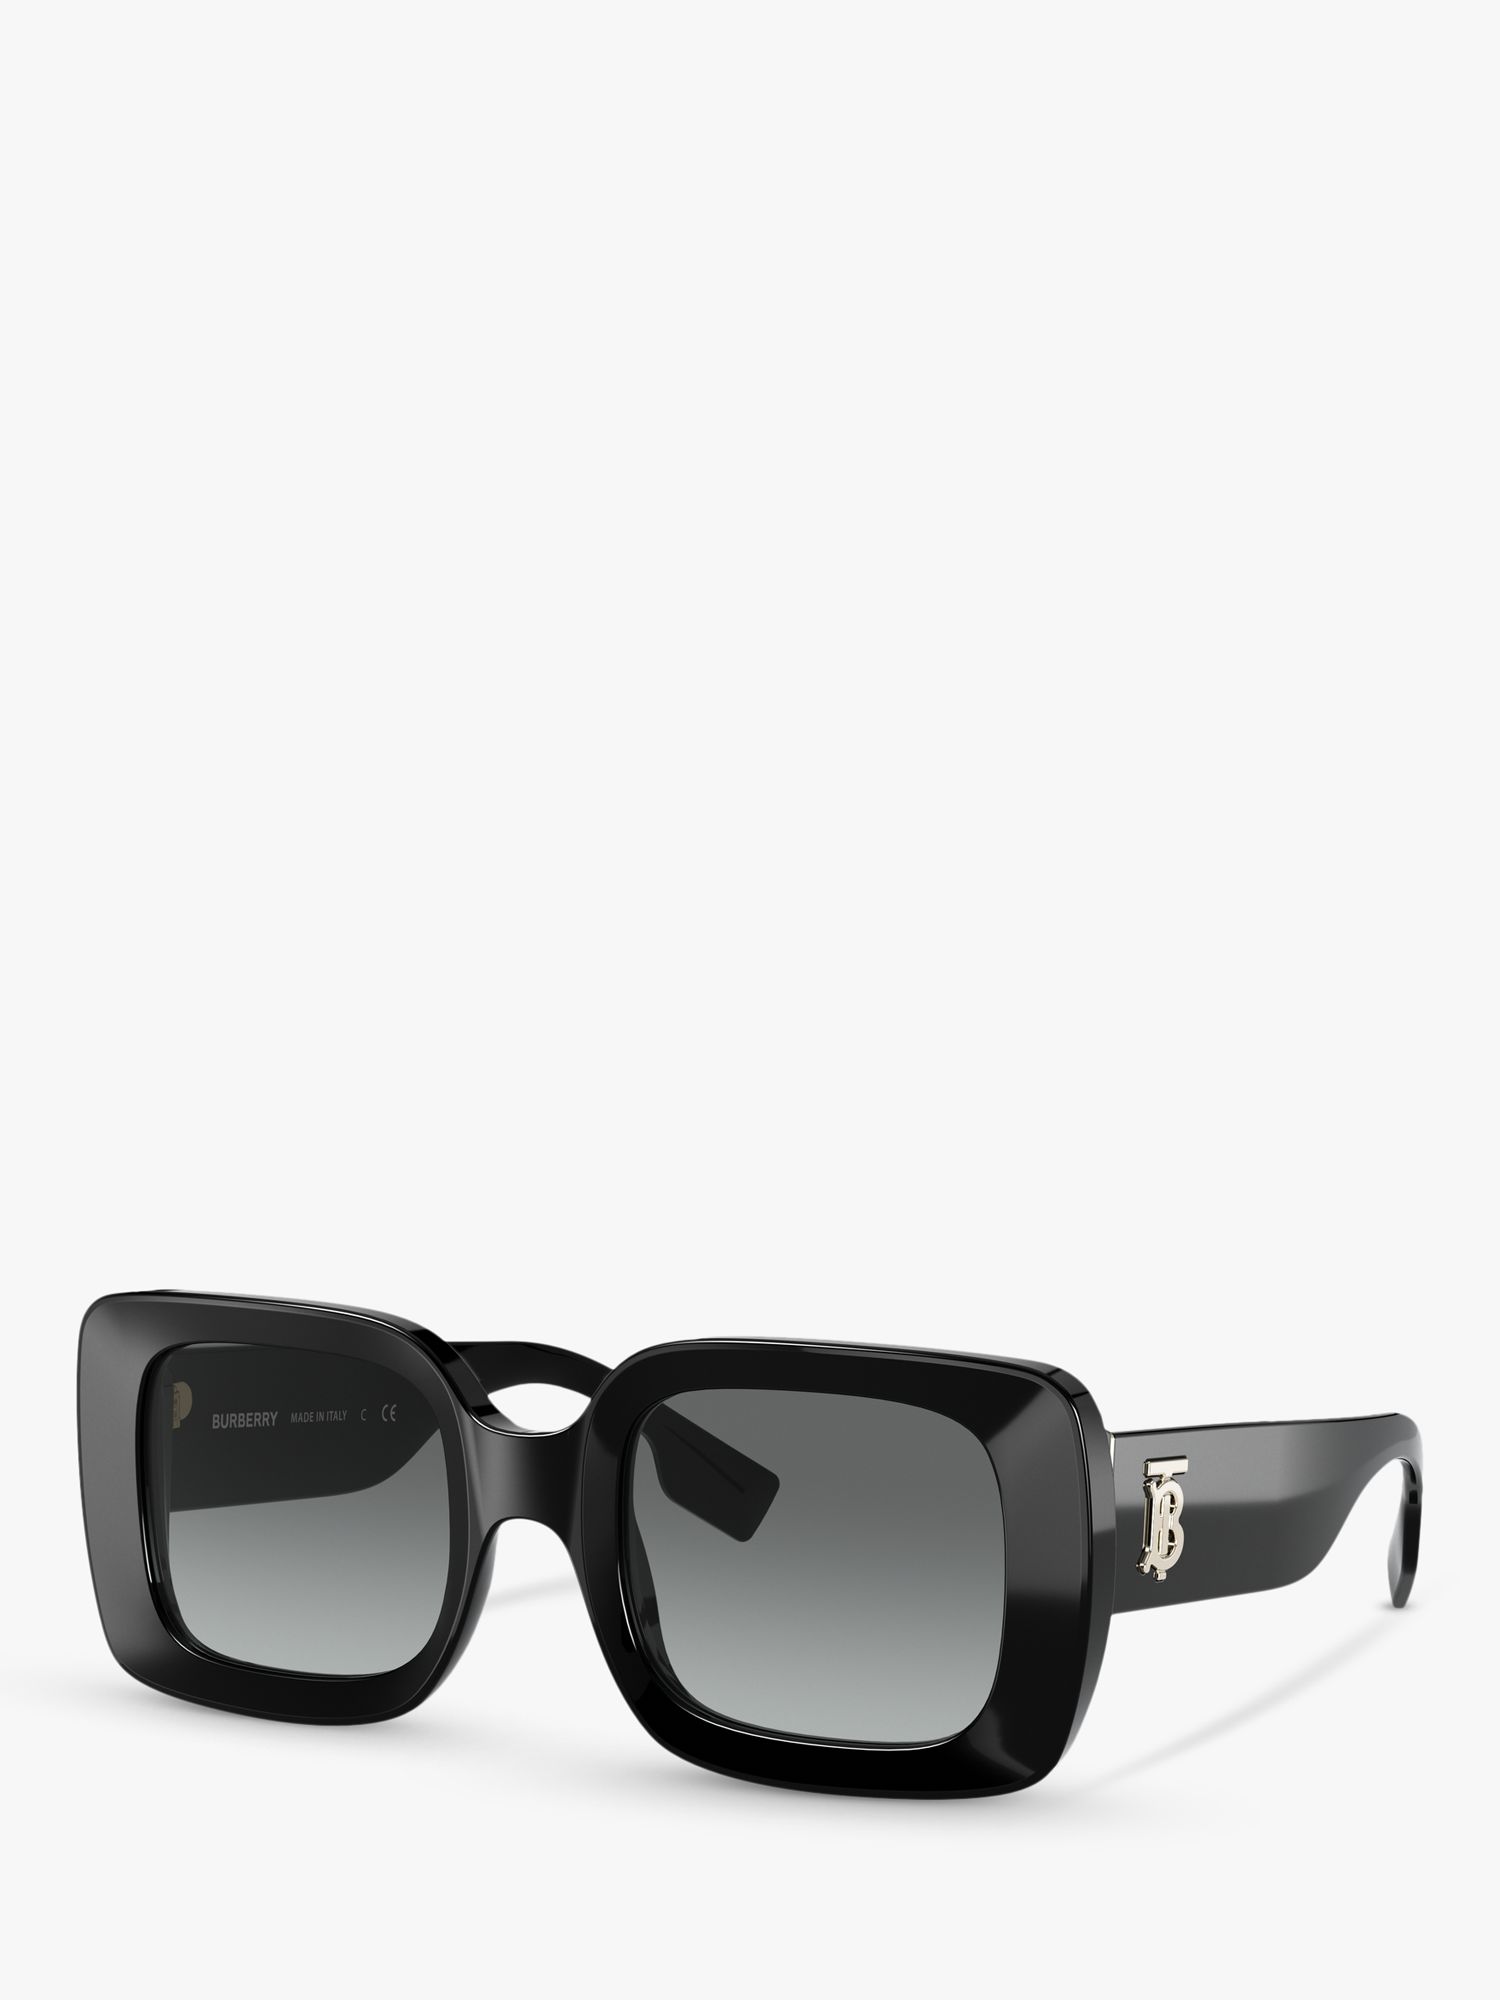 Burberry BE4327 Women's Square Sunglasses, Black/Grey Gradient at John  Lewis & Partners